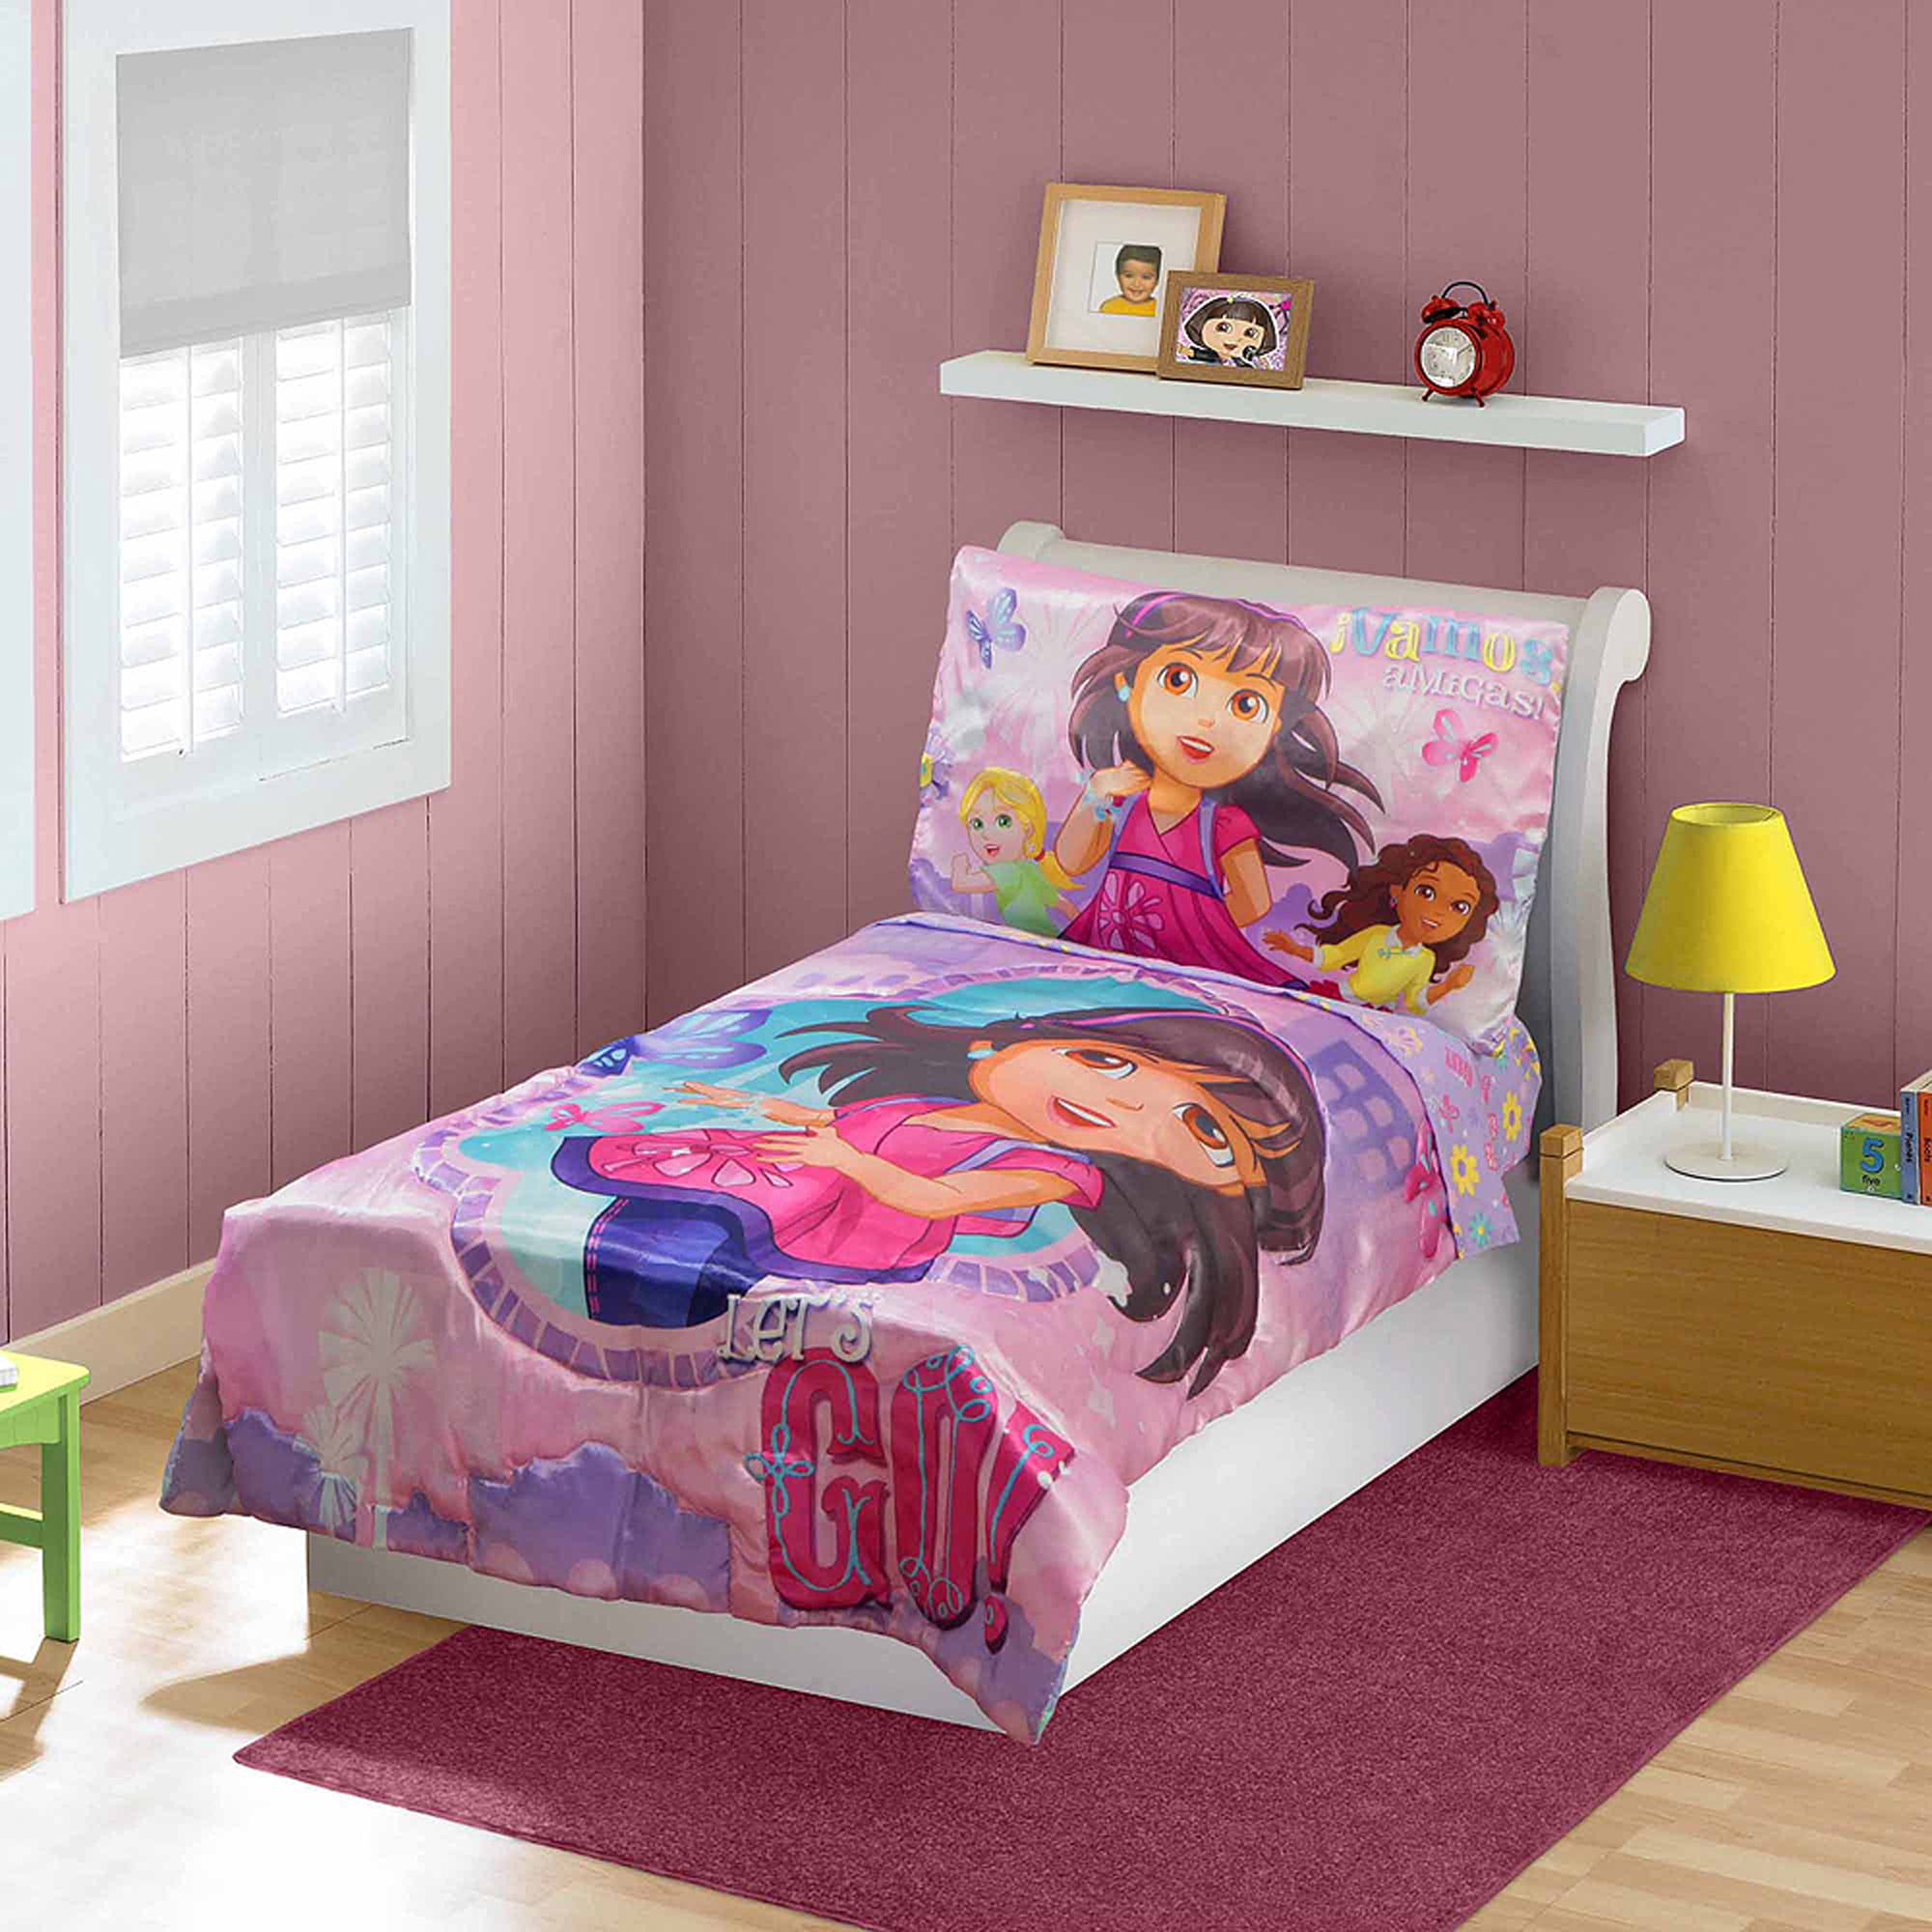 Dora Friends 3 Piece Toddler Bedding Set With Bonus Matching